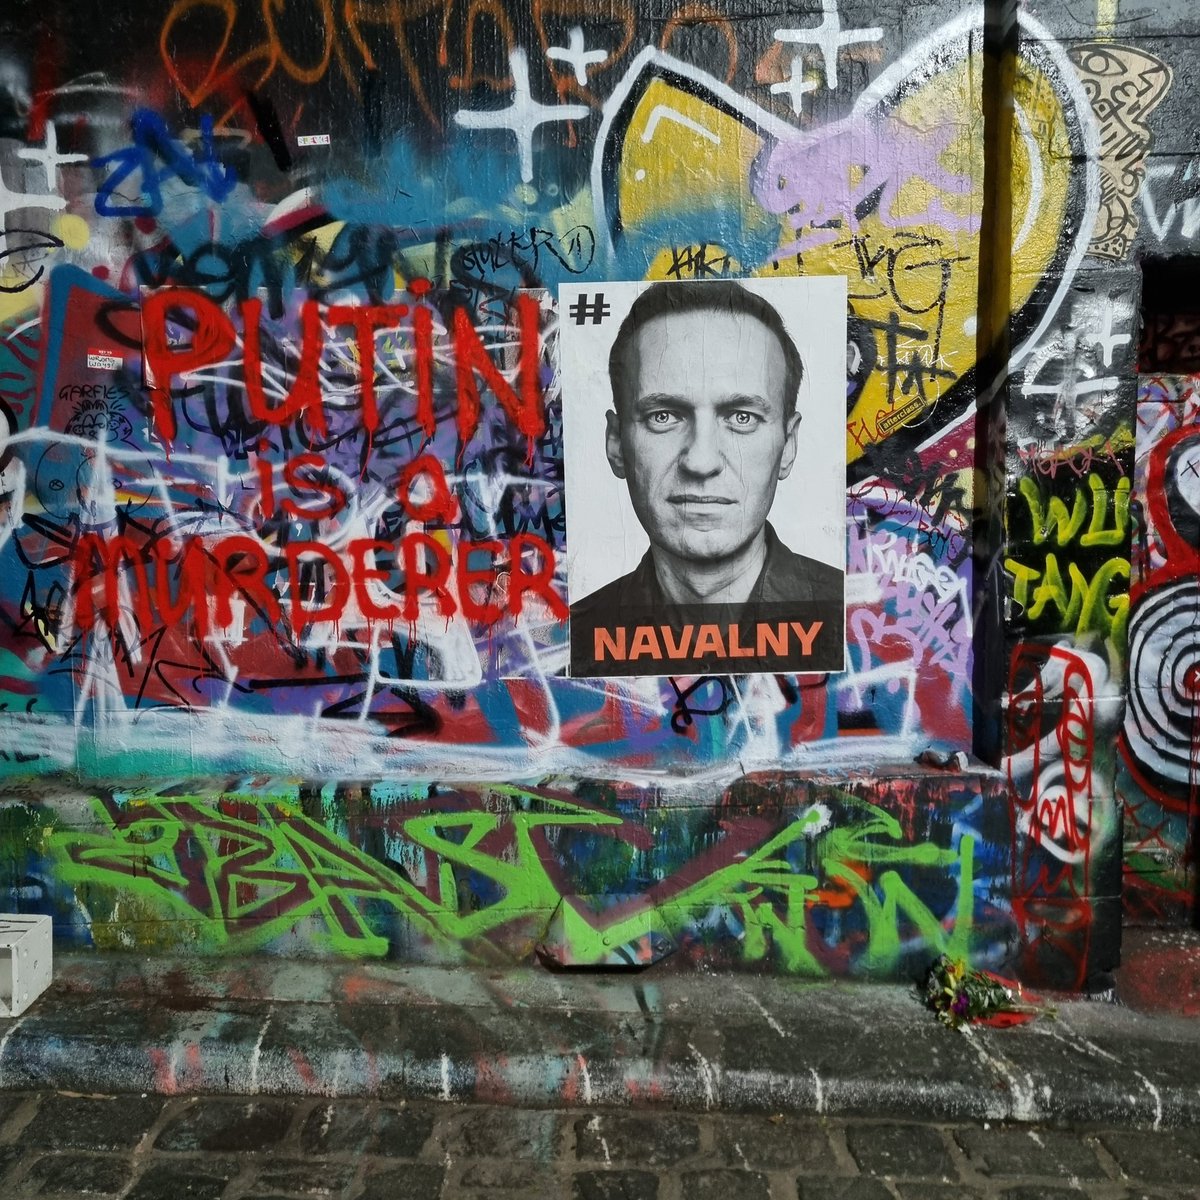 Hosier lane, Melbourne.  #Navalny #PutinWarCriminal #PutinMurderer